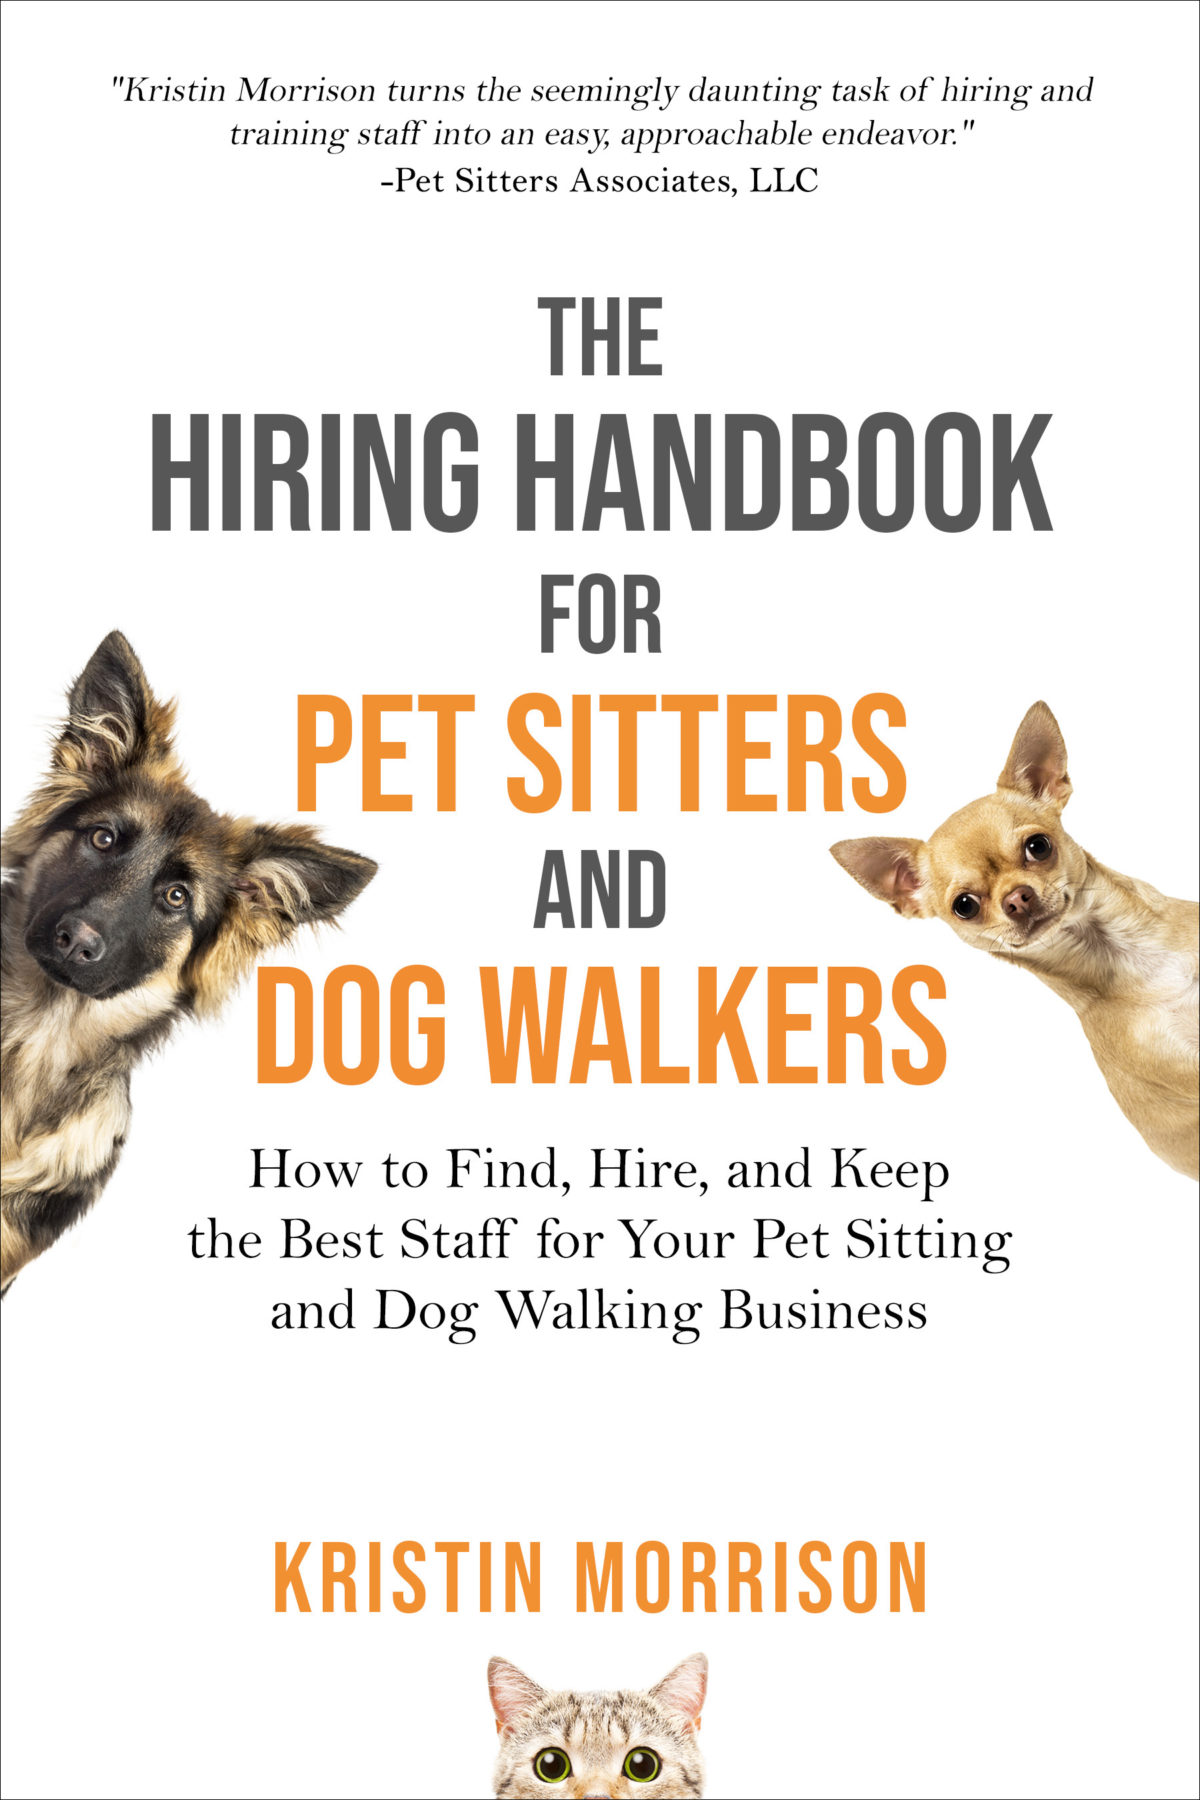 Walter's Walks Pet Sitting Services